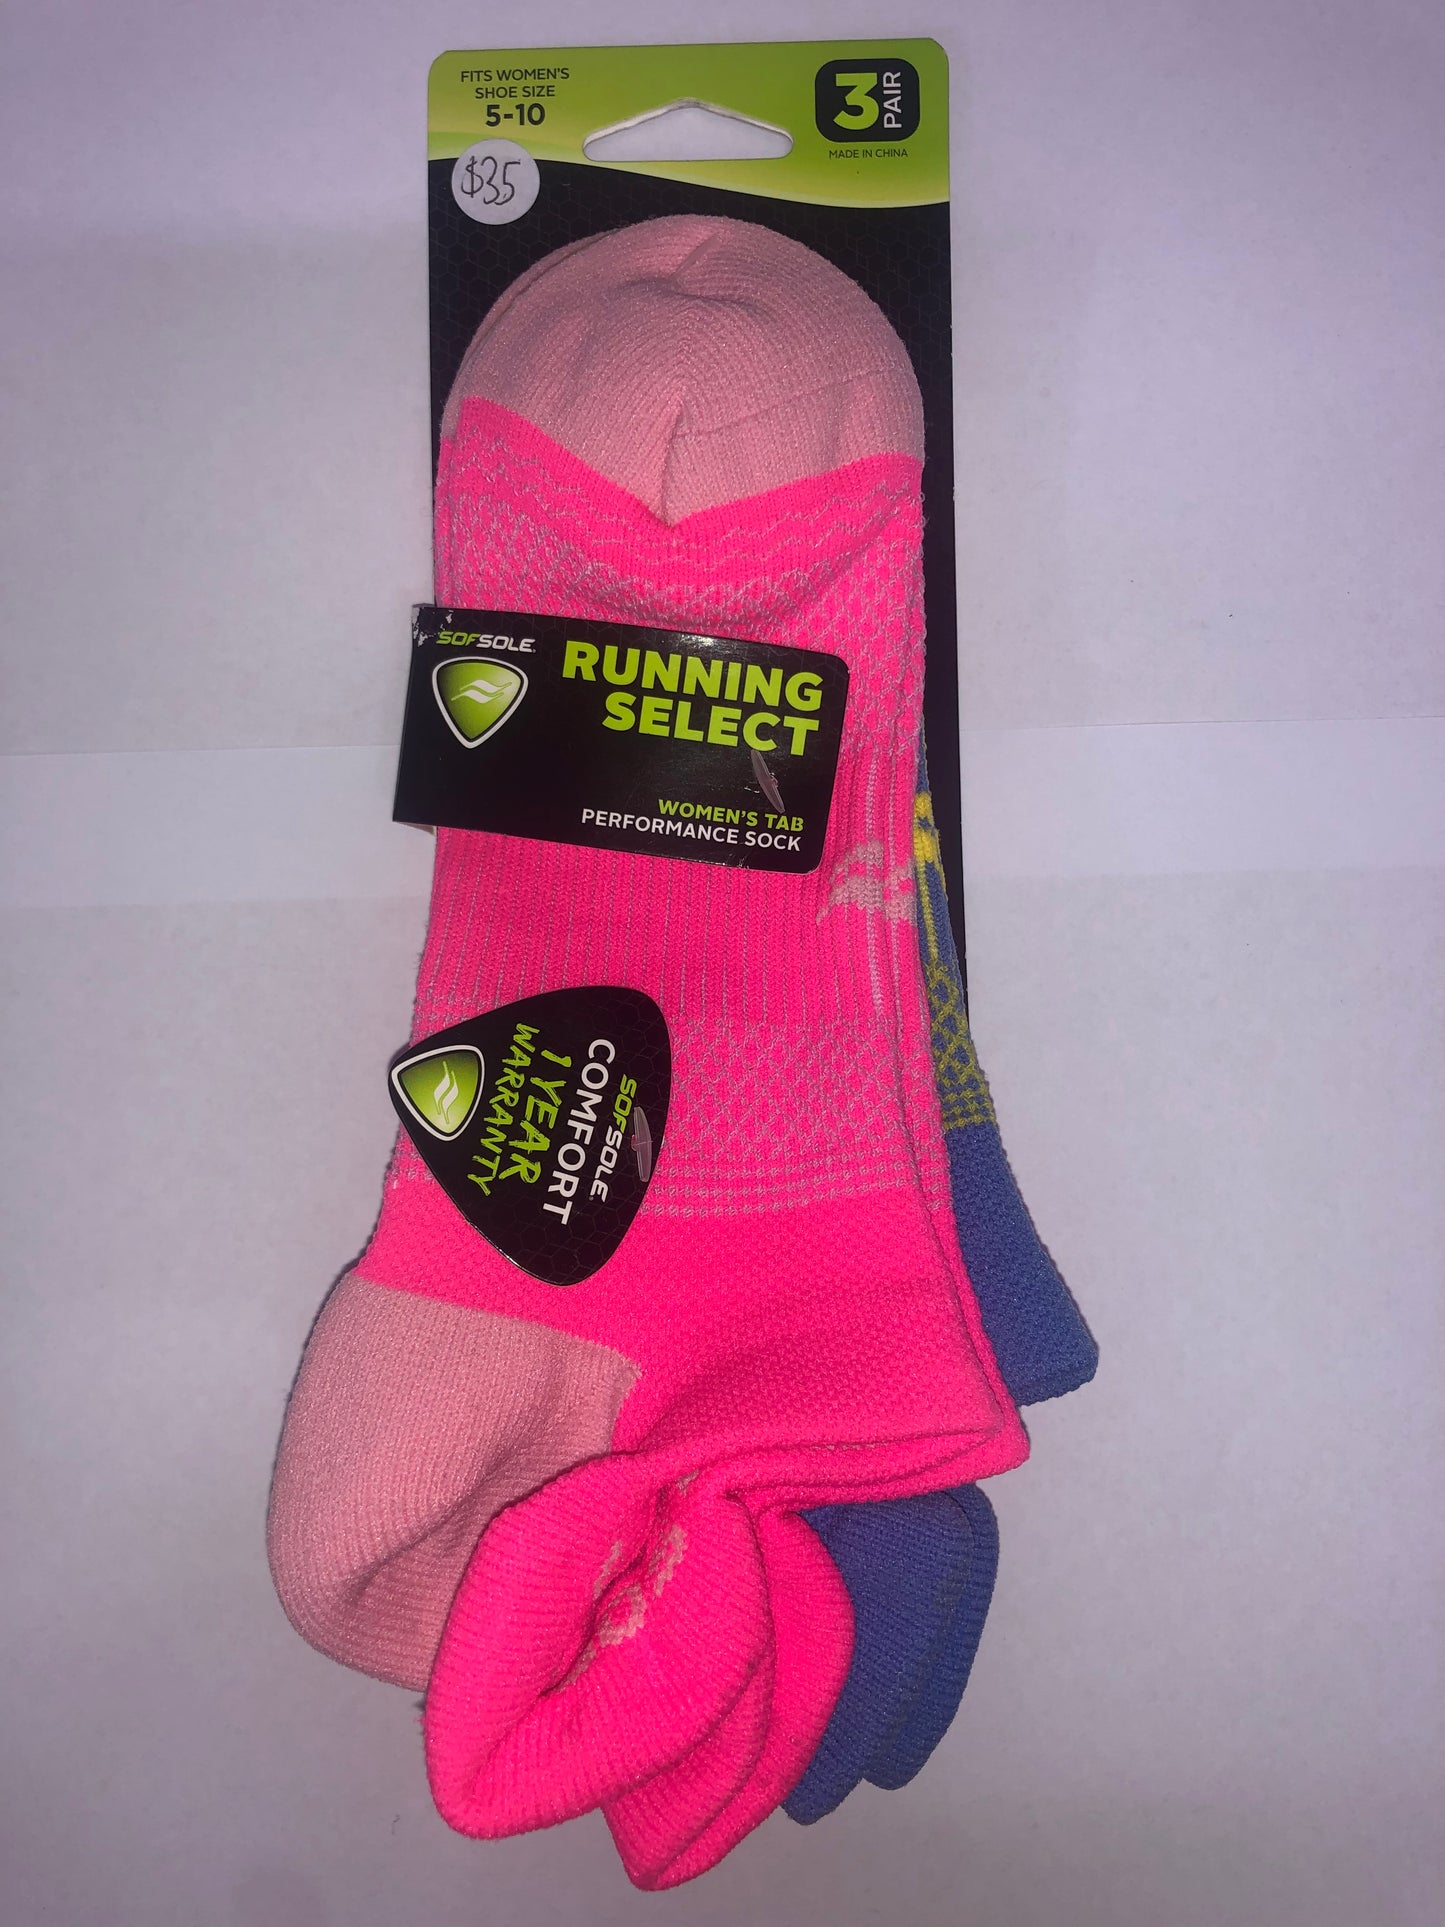 Womens Sof Sole Running Select 3 Pack Socks